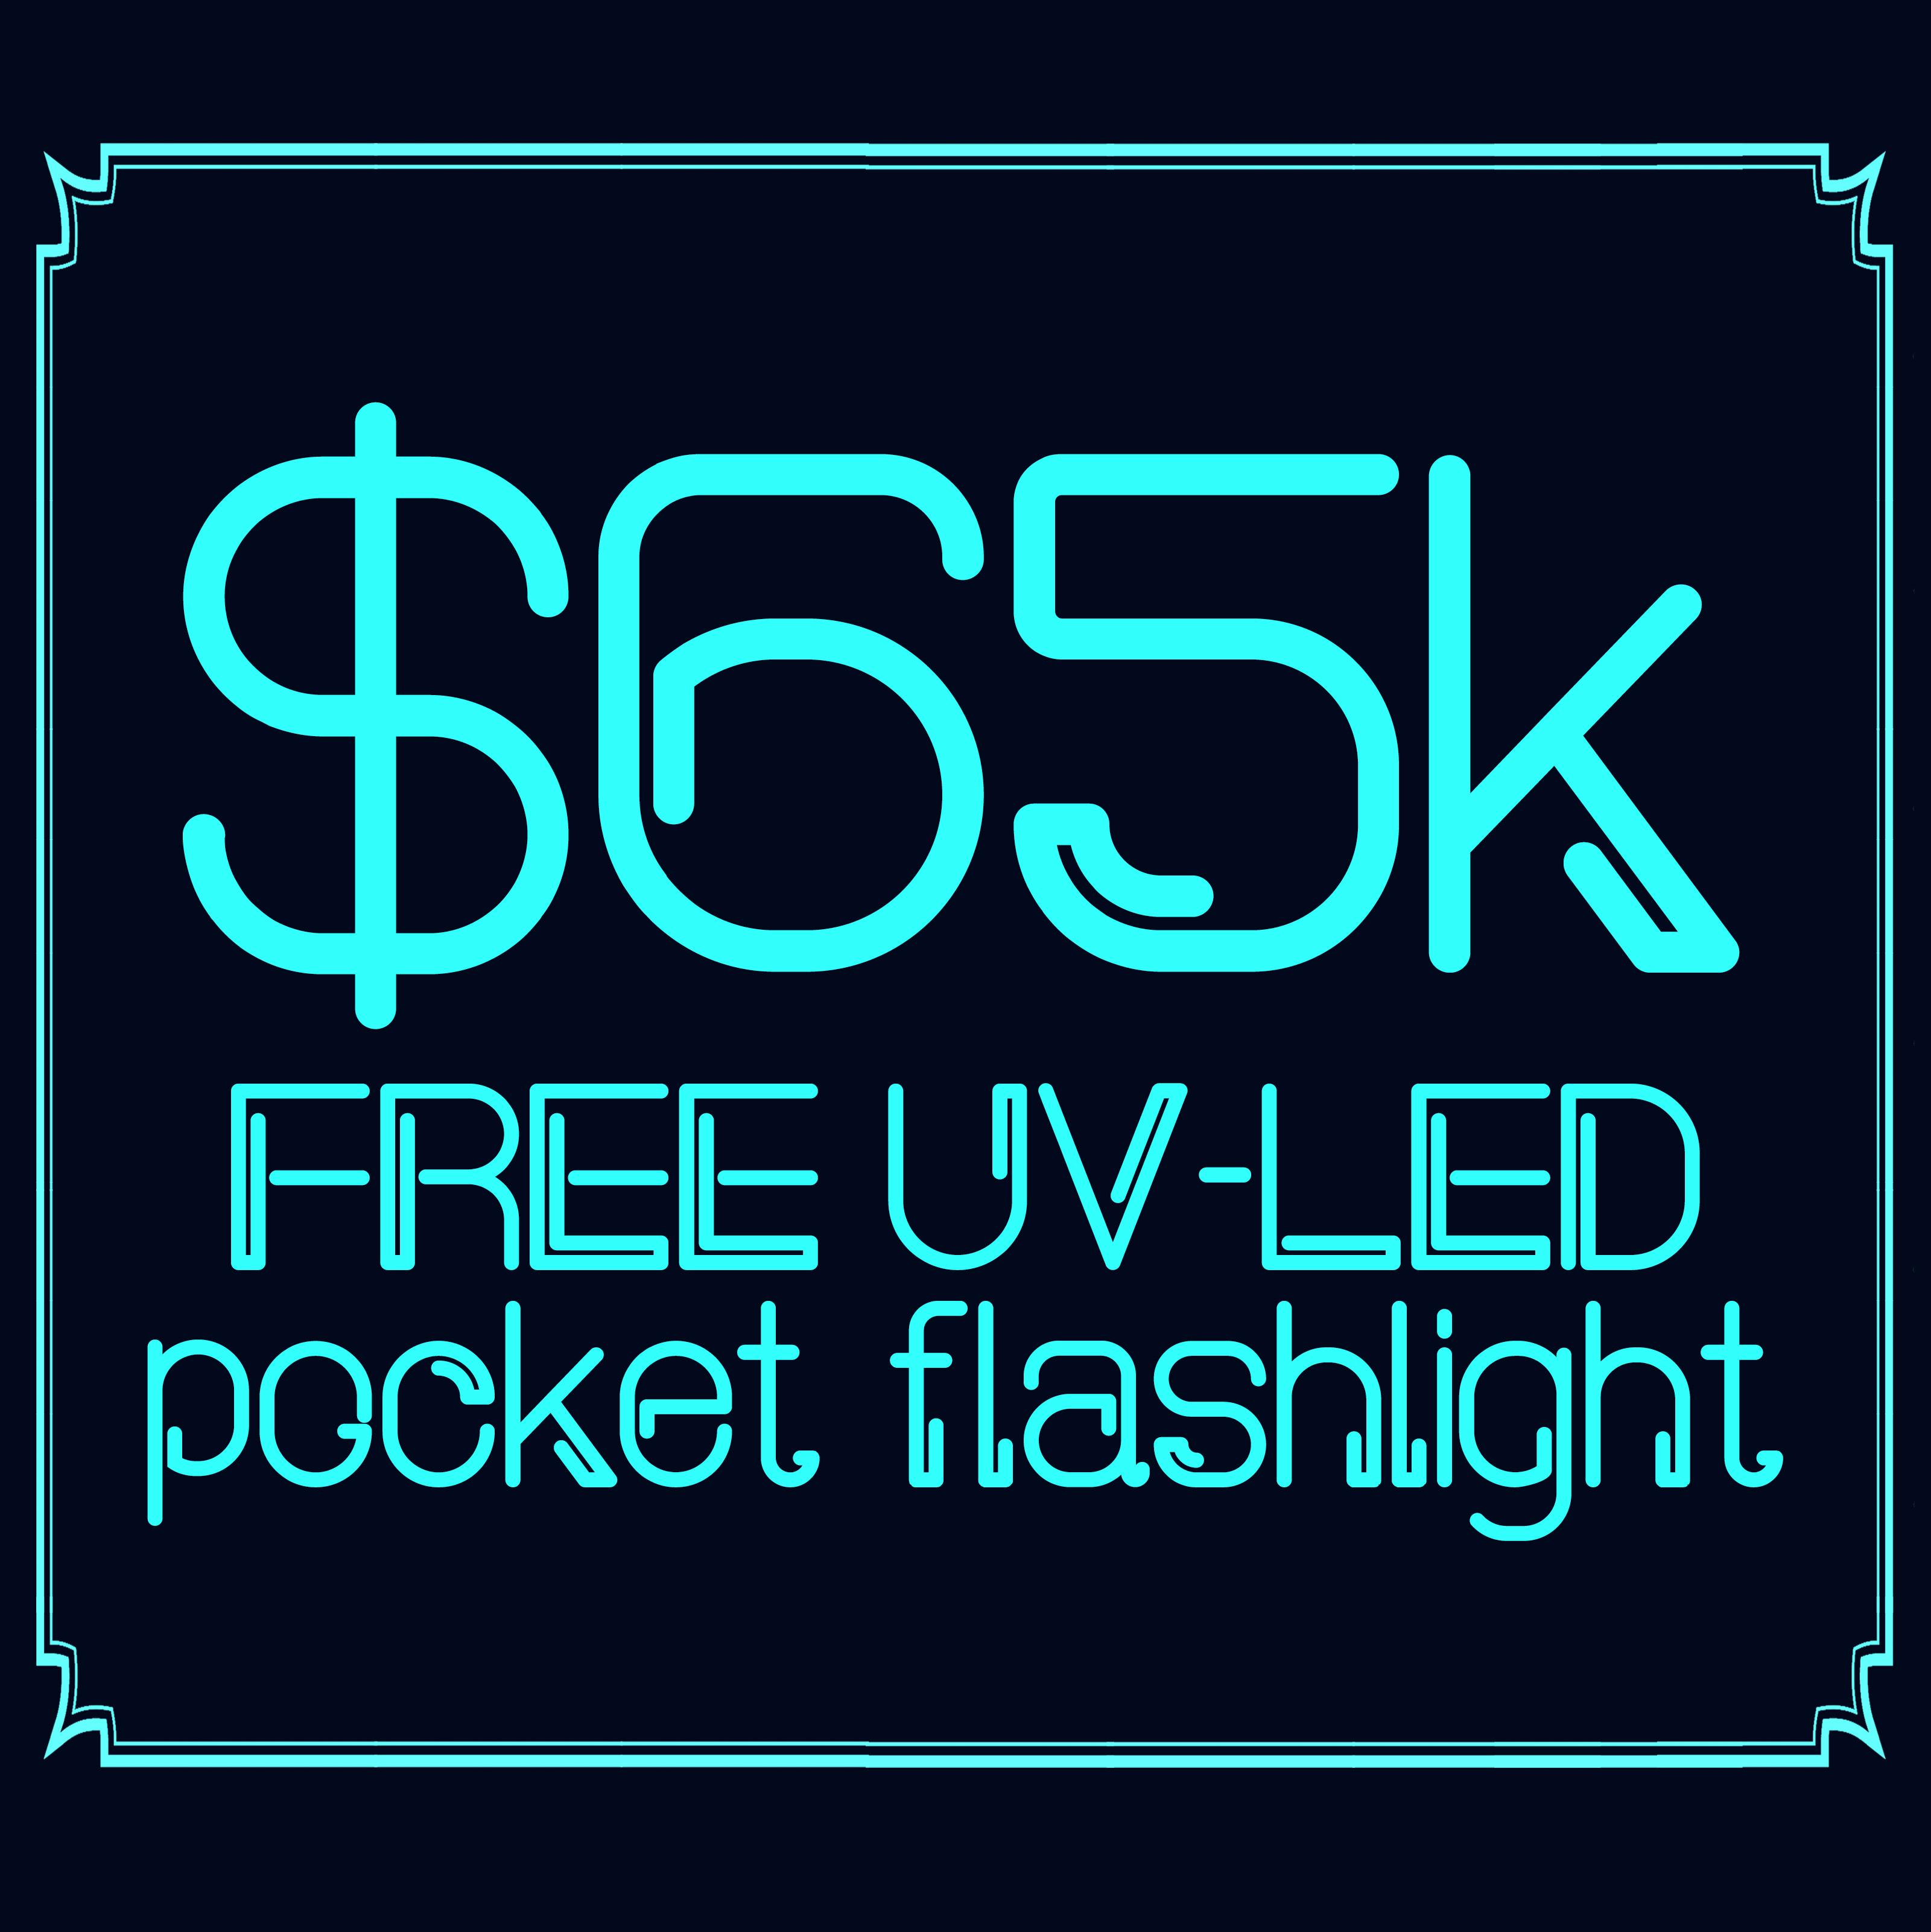 FREE UV-LED pocket flashlight